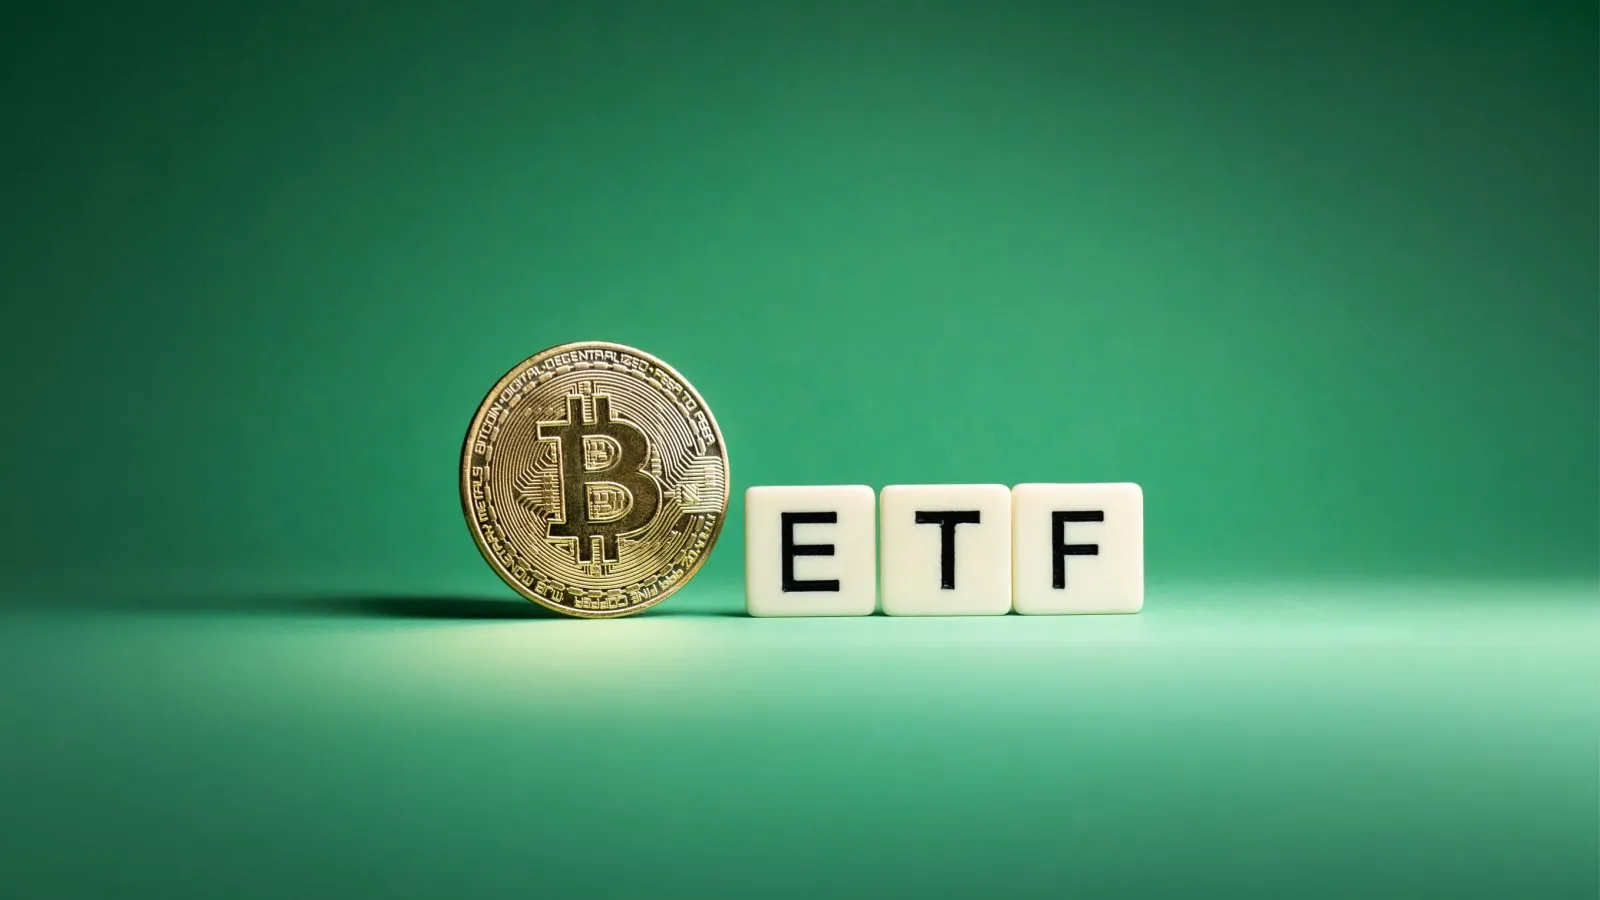 Bitcoin ETFs are increasingly popular on Wall Street. Image: Shutterstock